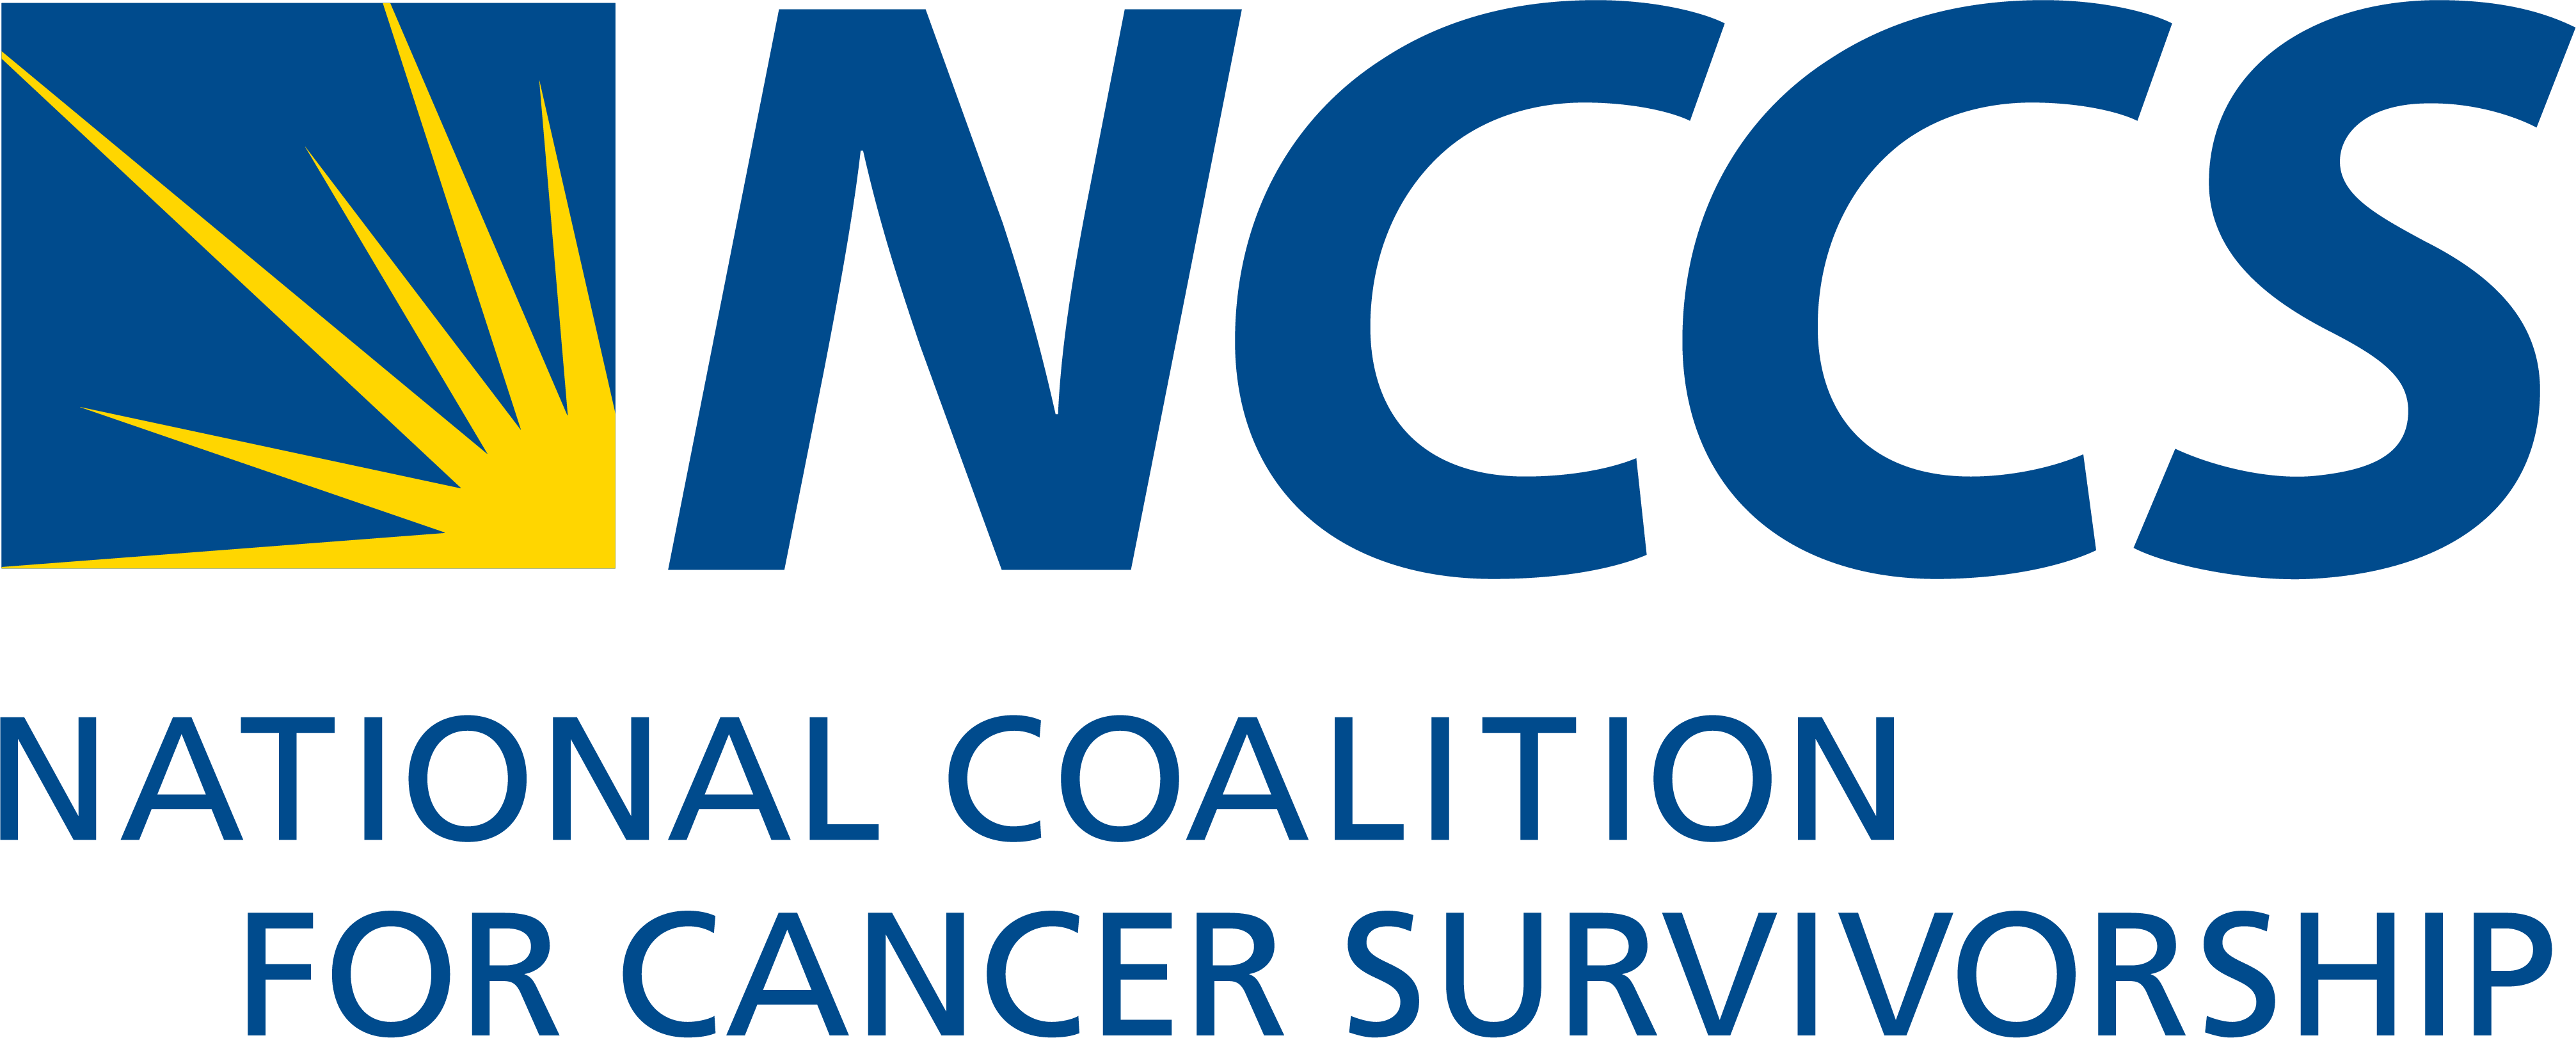 National Coalition for Cancer Survivorship logo